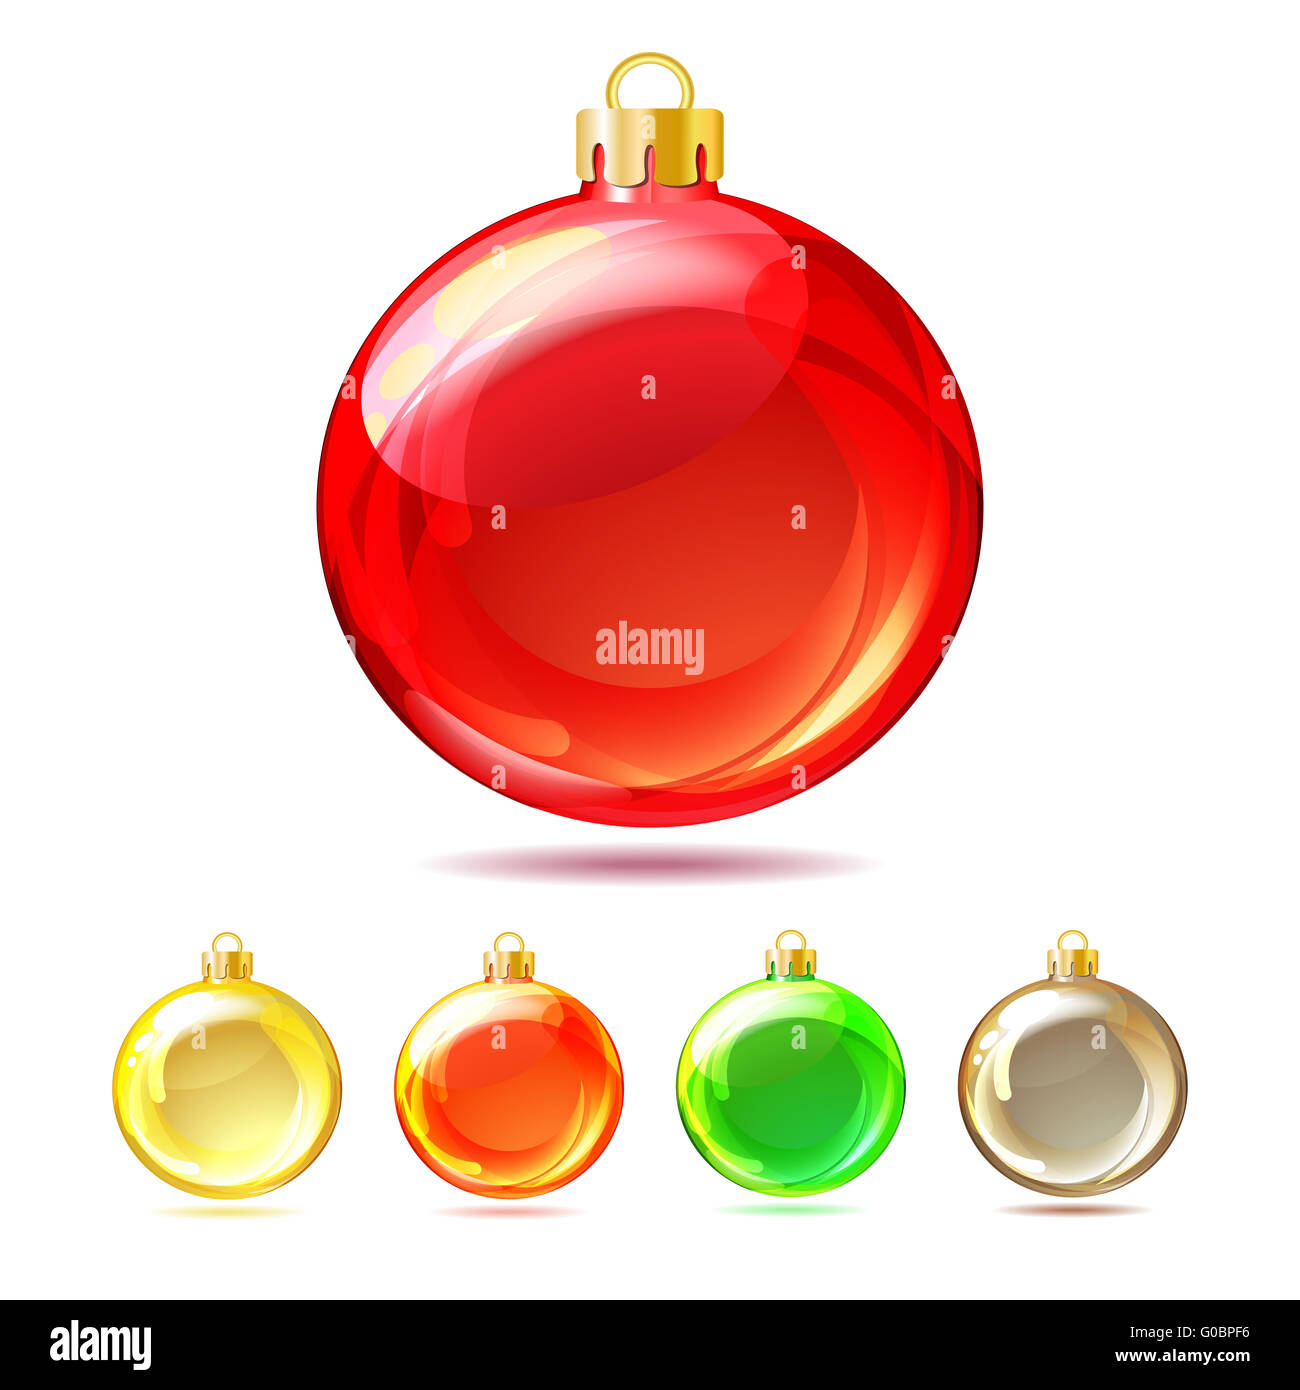 Set of Glossy Christmas balls on white background. Stock Photo